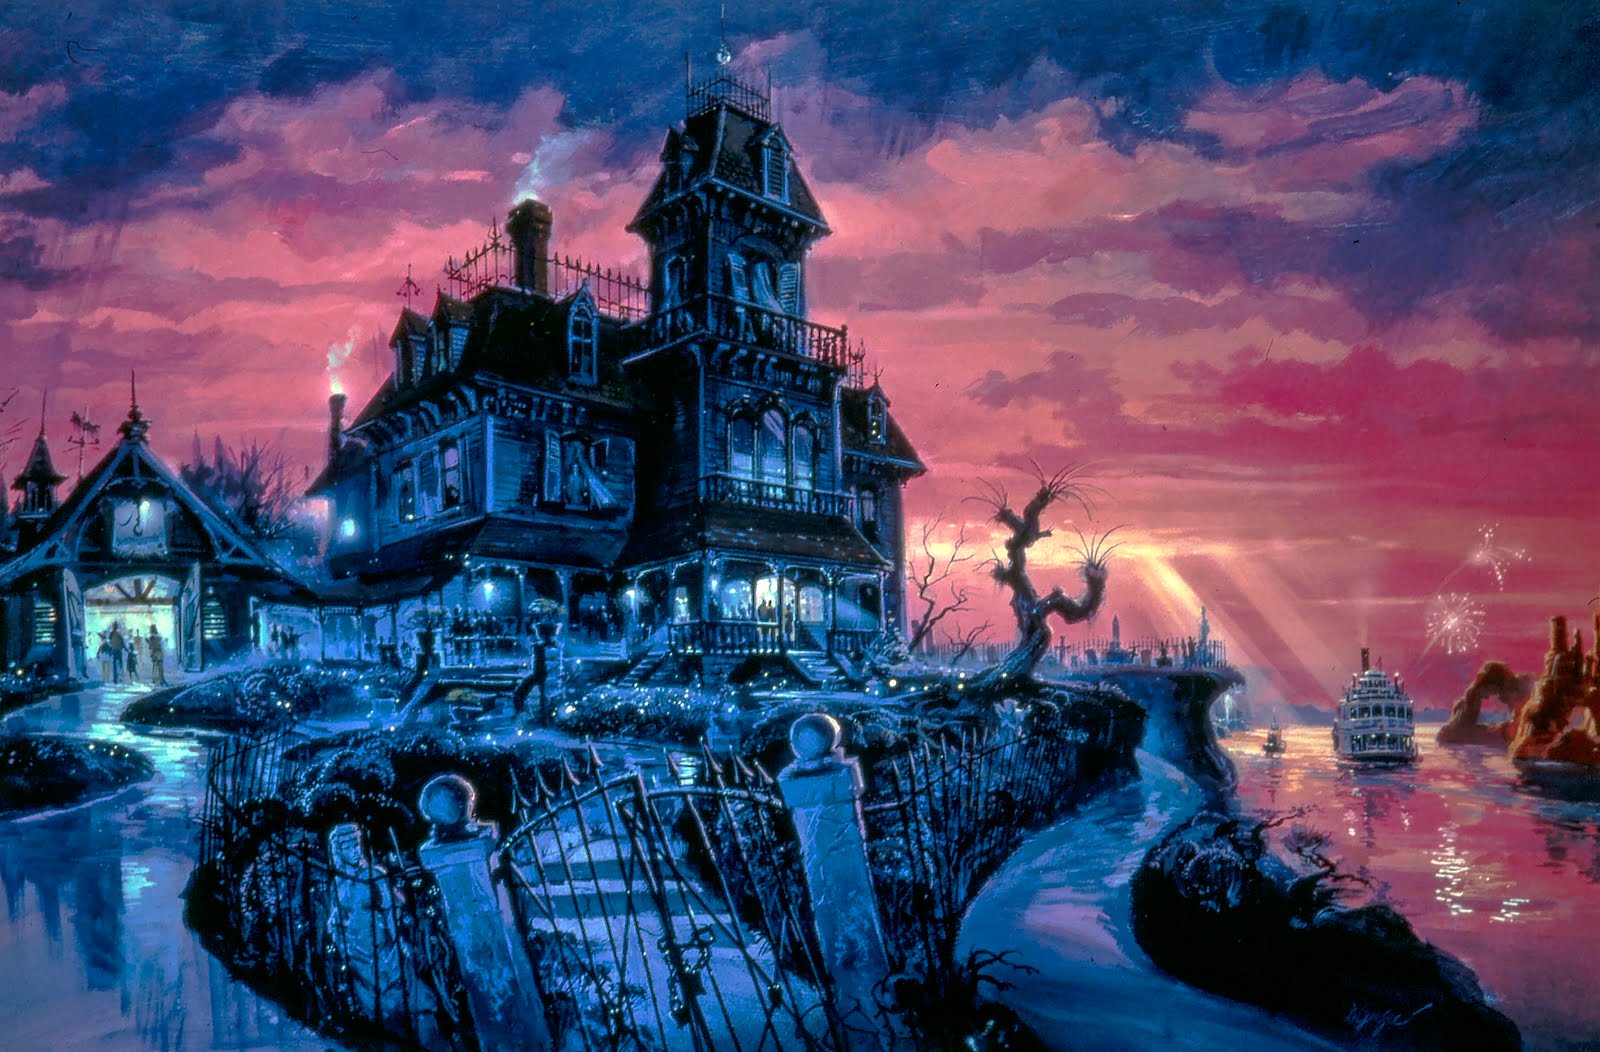 Disneyland Paris Release a Great 17 Min Documentary Telling the Story of Phantom Manor Renovation